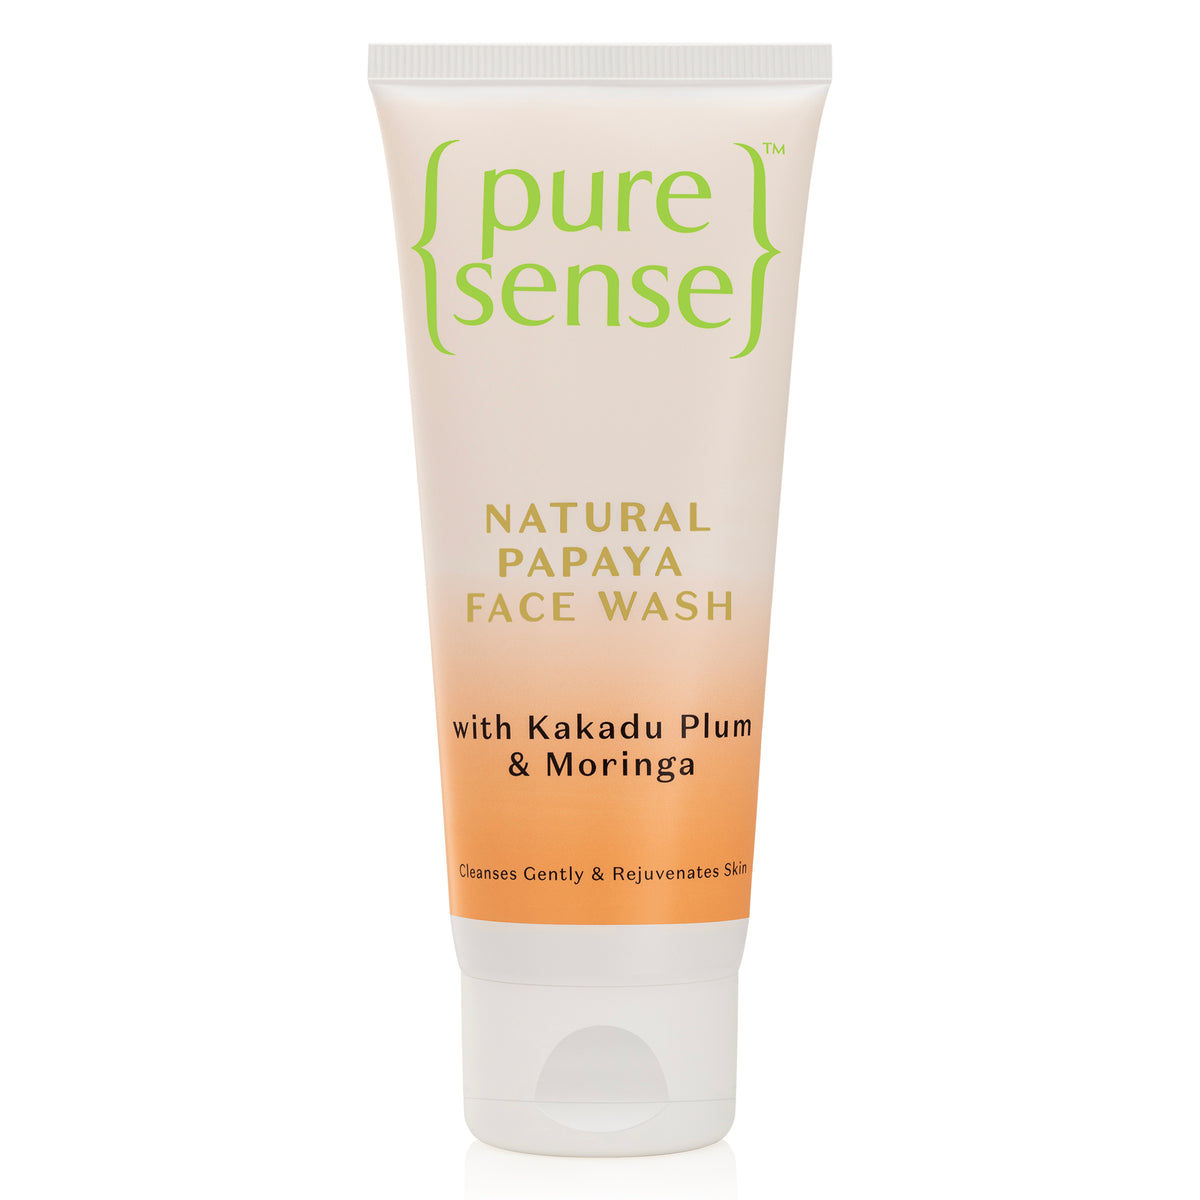 Natural Papaya Face Wash | From the makers of Parachute Advansed | 100ml - PureSense